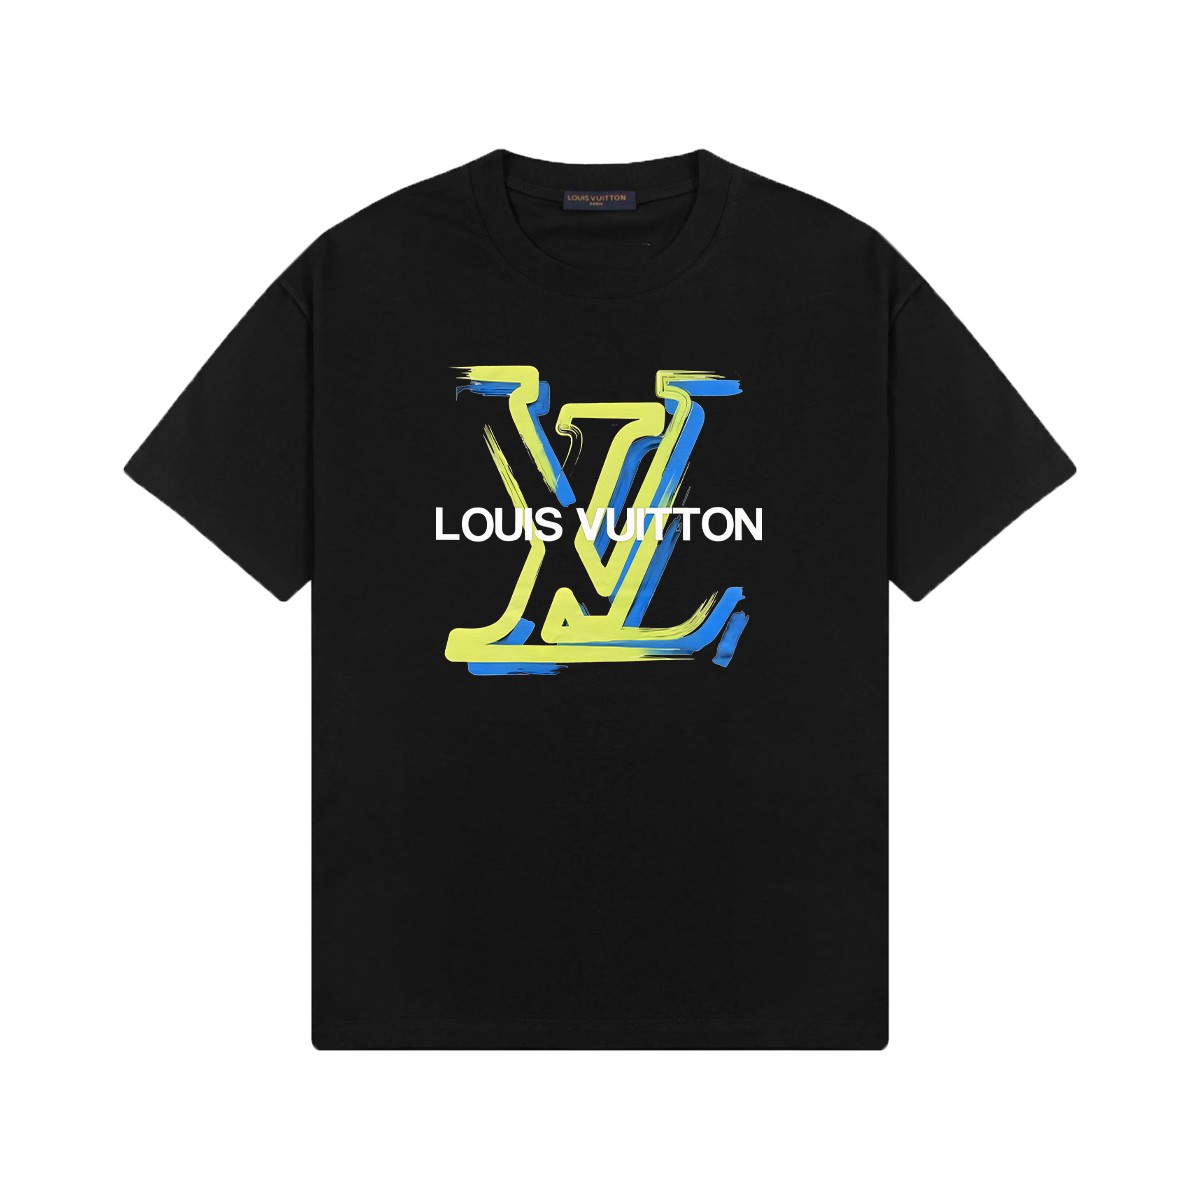 Louis Vuitton Clothing T-Shirt Black Doodle White Printing Unisex Combed Cotton Fashion Sweatpants